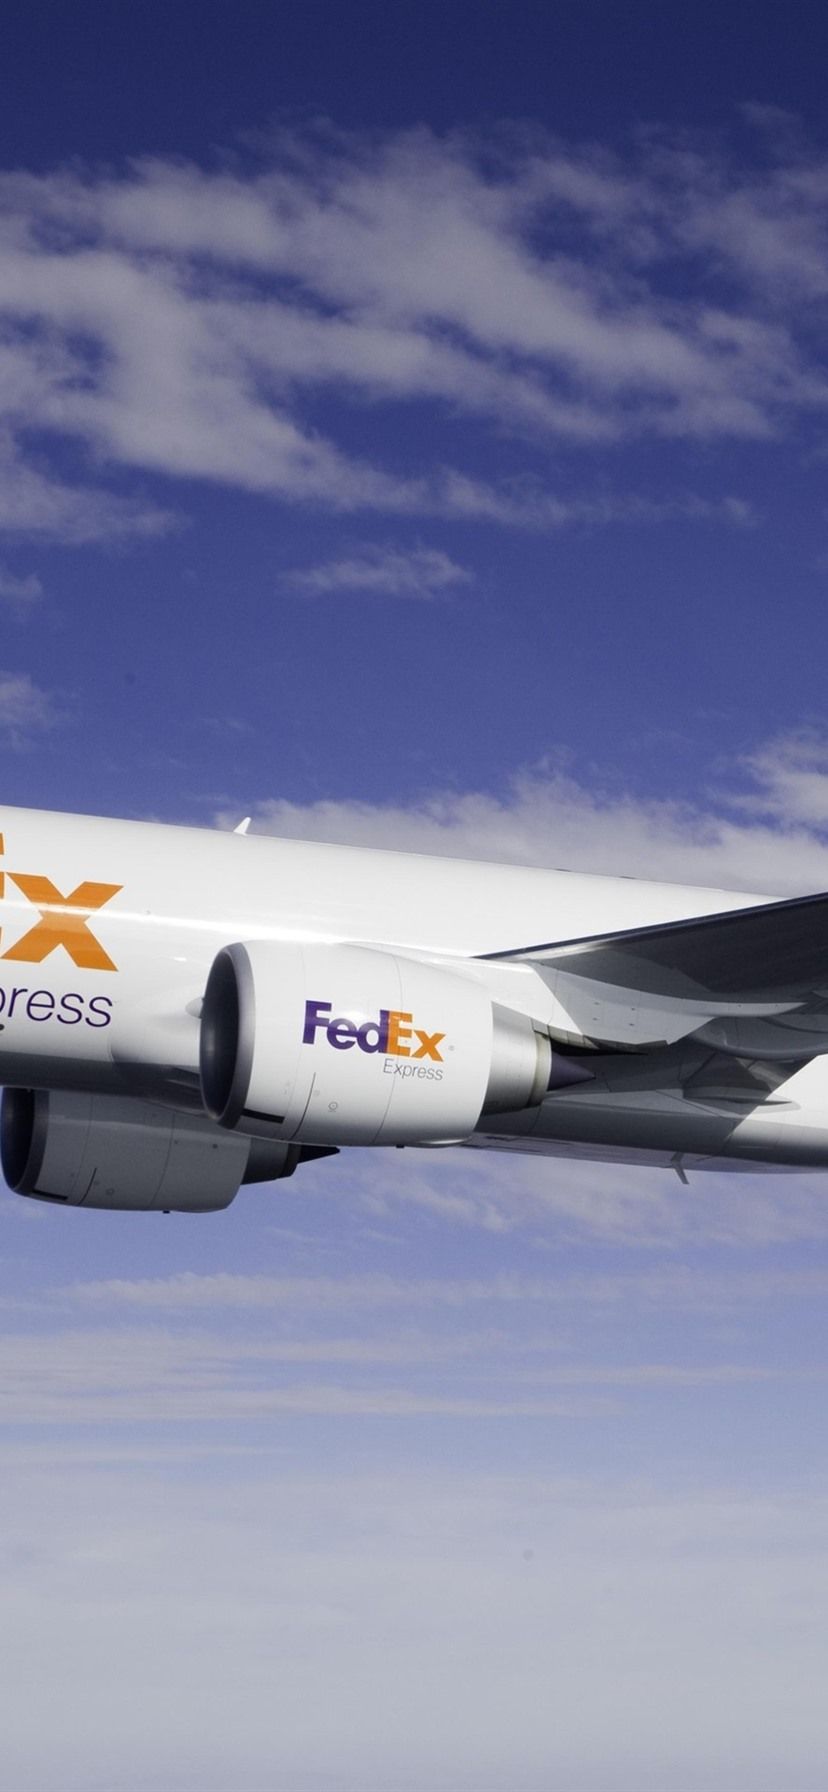 Fedex Express Aircraft 1080x1920 IPhone 8 7 6 6S Plus Wallpaper